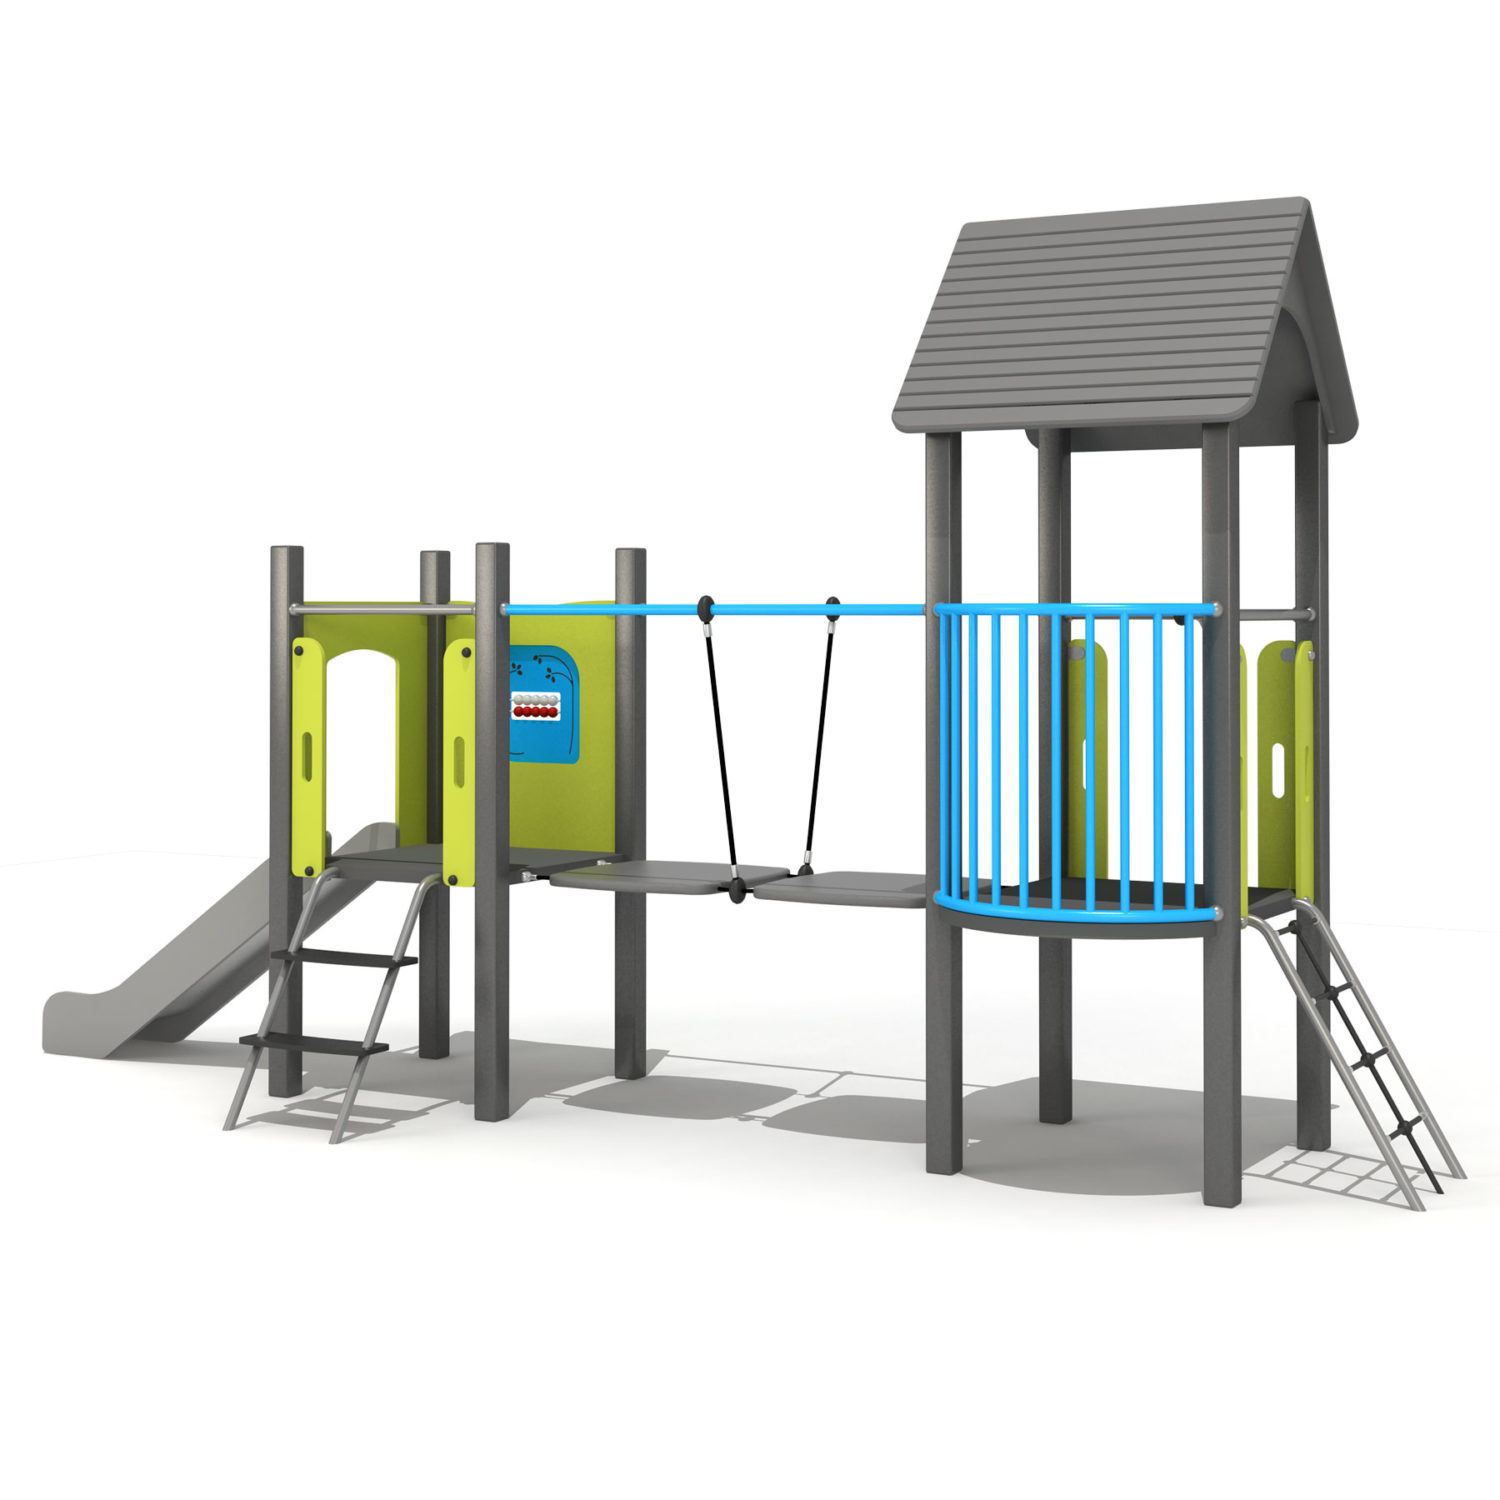 Wood Playground S1819 : สนามเด็กเล่นสไลด์เดอร์สะพานข้ามแบบที่ 2 HAPPY LAND